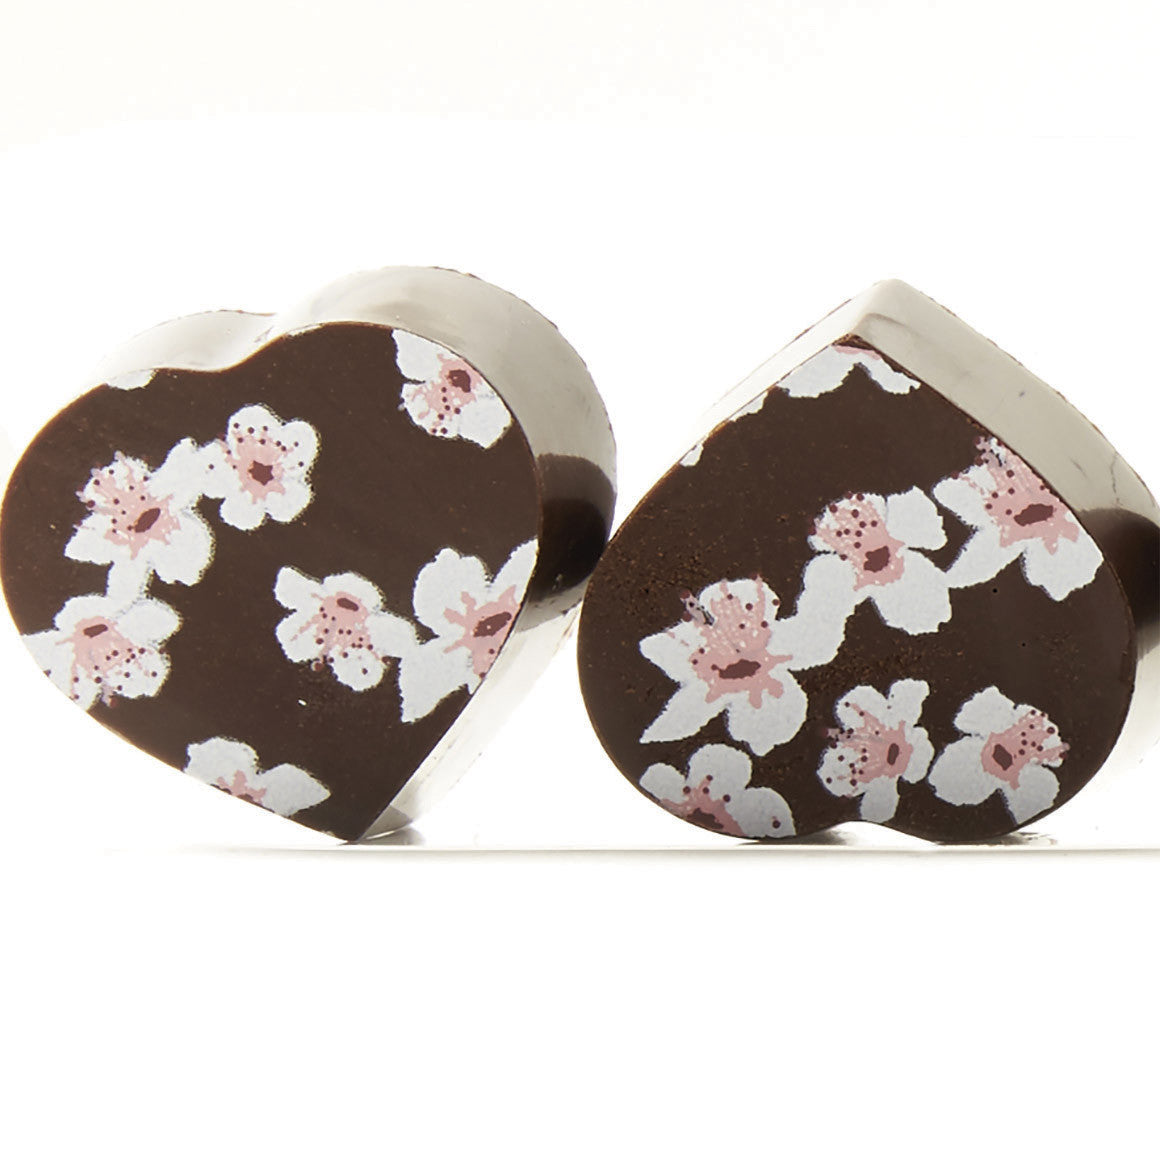 Spring Flowers Bonbons: Dark Chocolate & Dulce de Leche Wooden Table Baking Co.